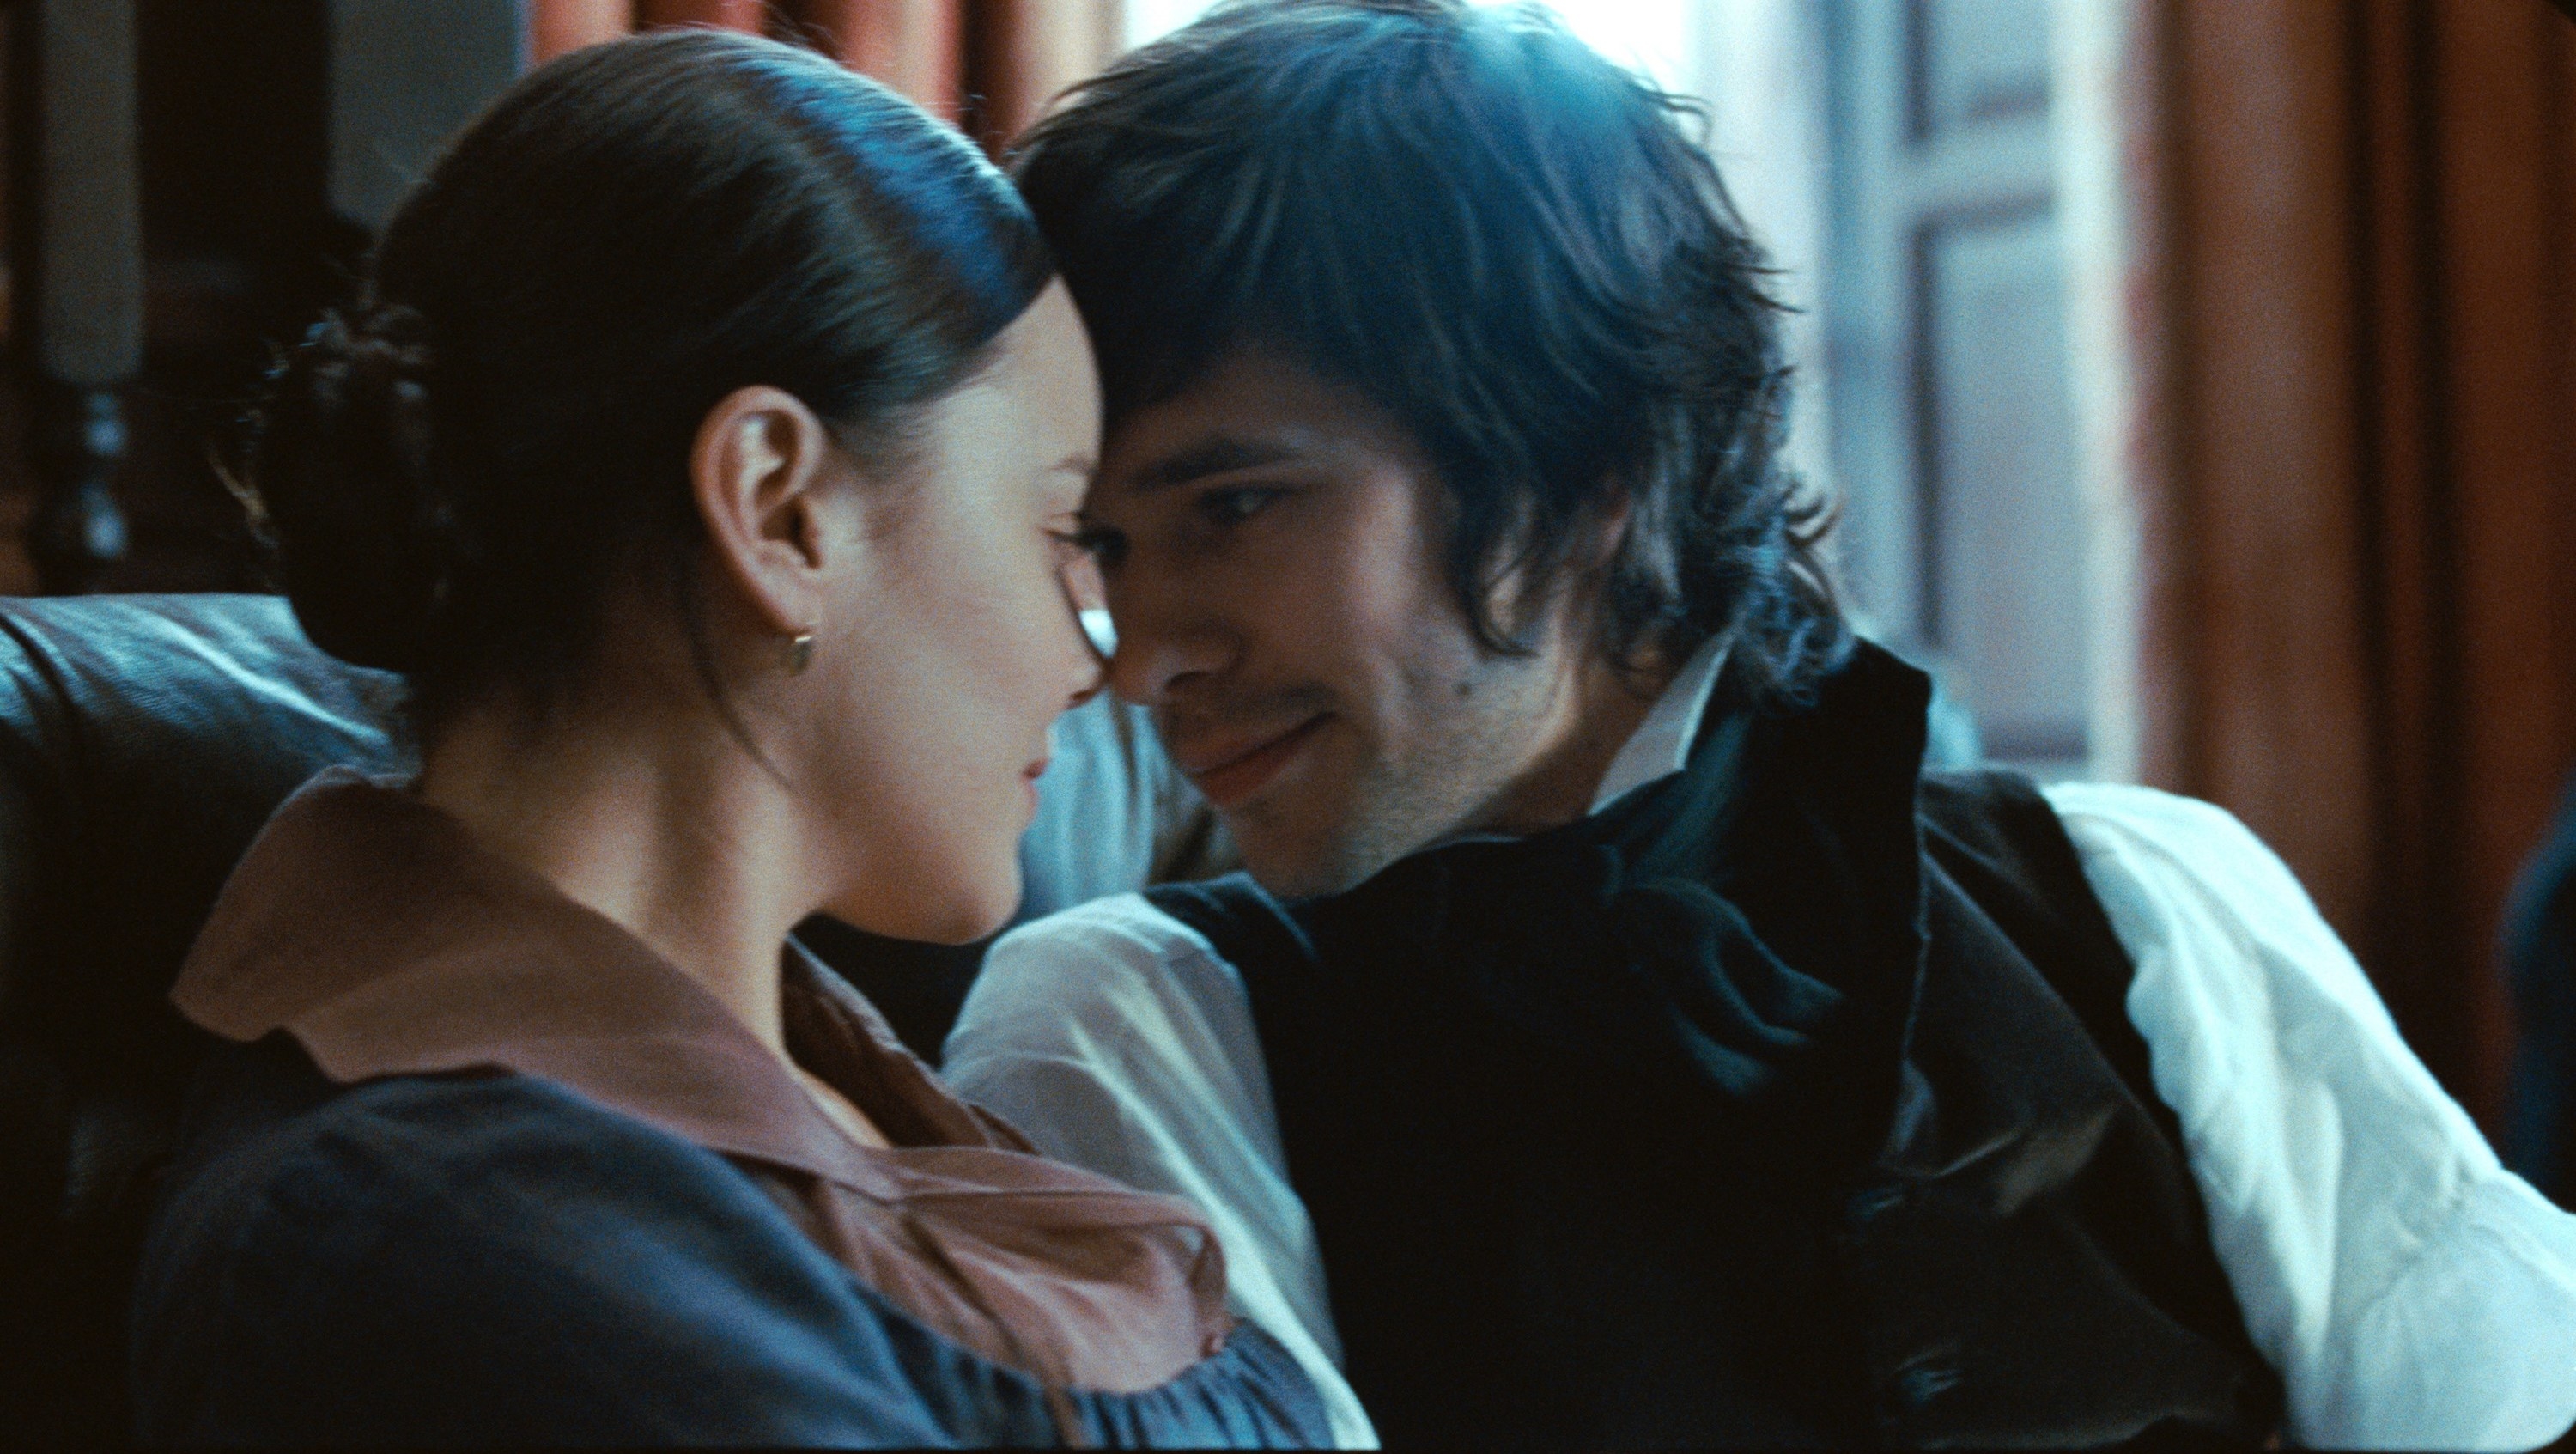 Abbie Cornish as Fanny Brawne and Ben Whishaw as John Keats in Bright Star (2009)